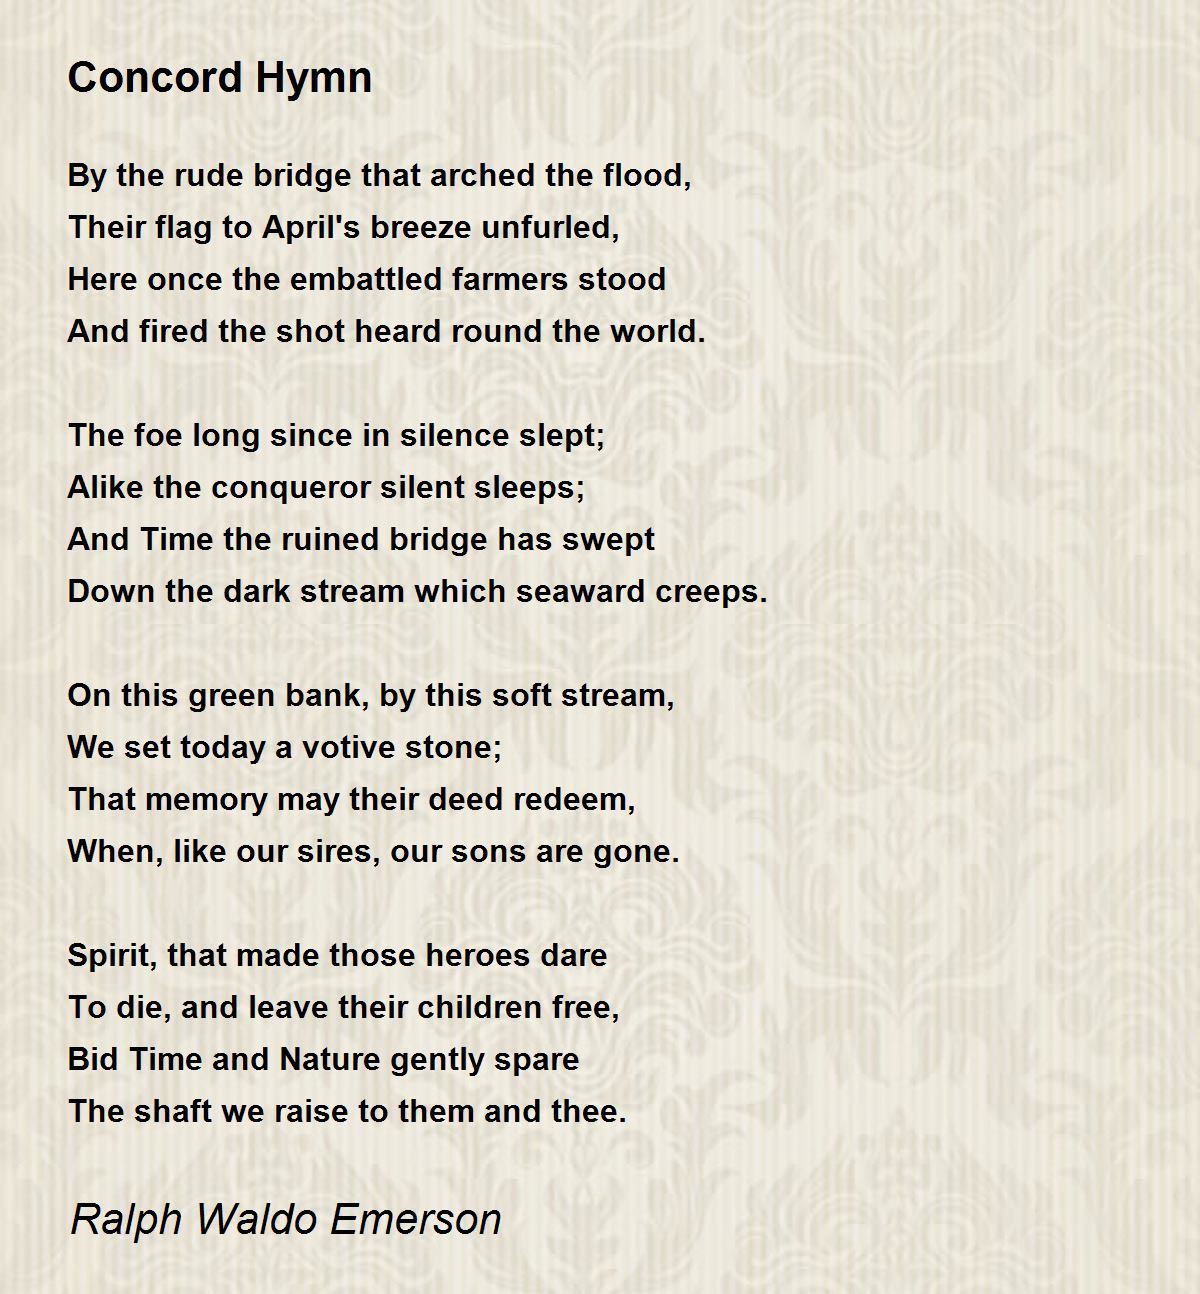 Concord Hymn Poem by Ralph Waldo Emerson - Poem Hunter